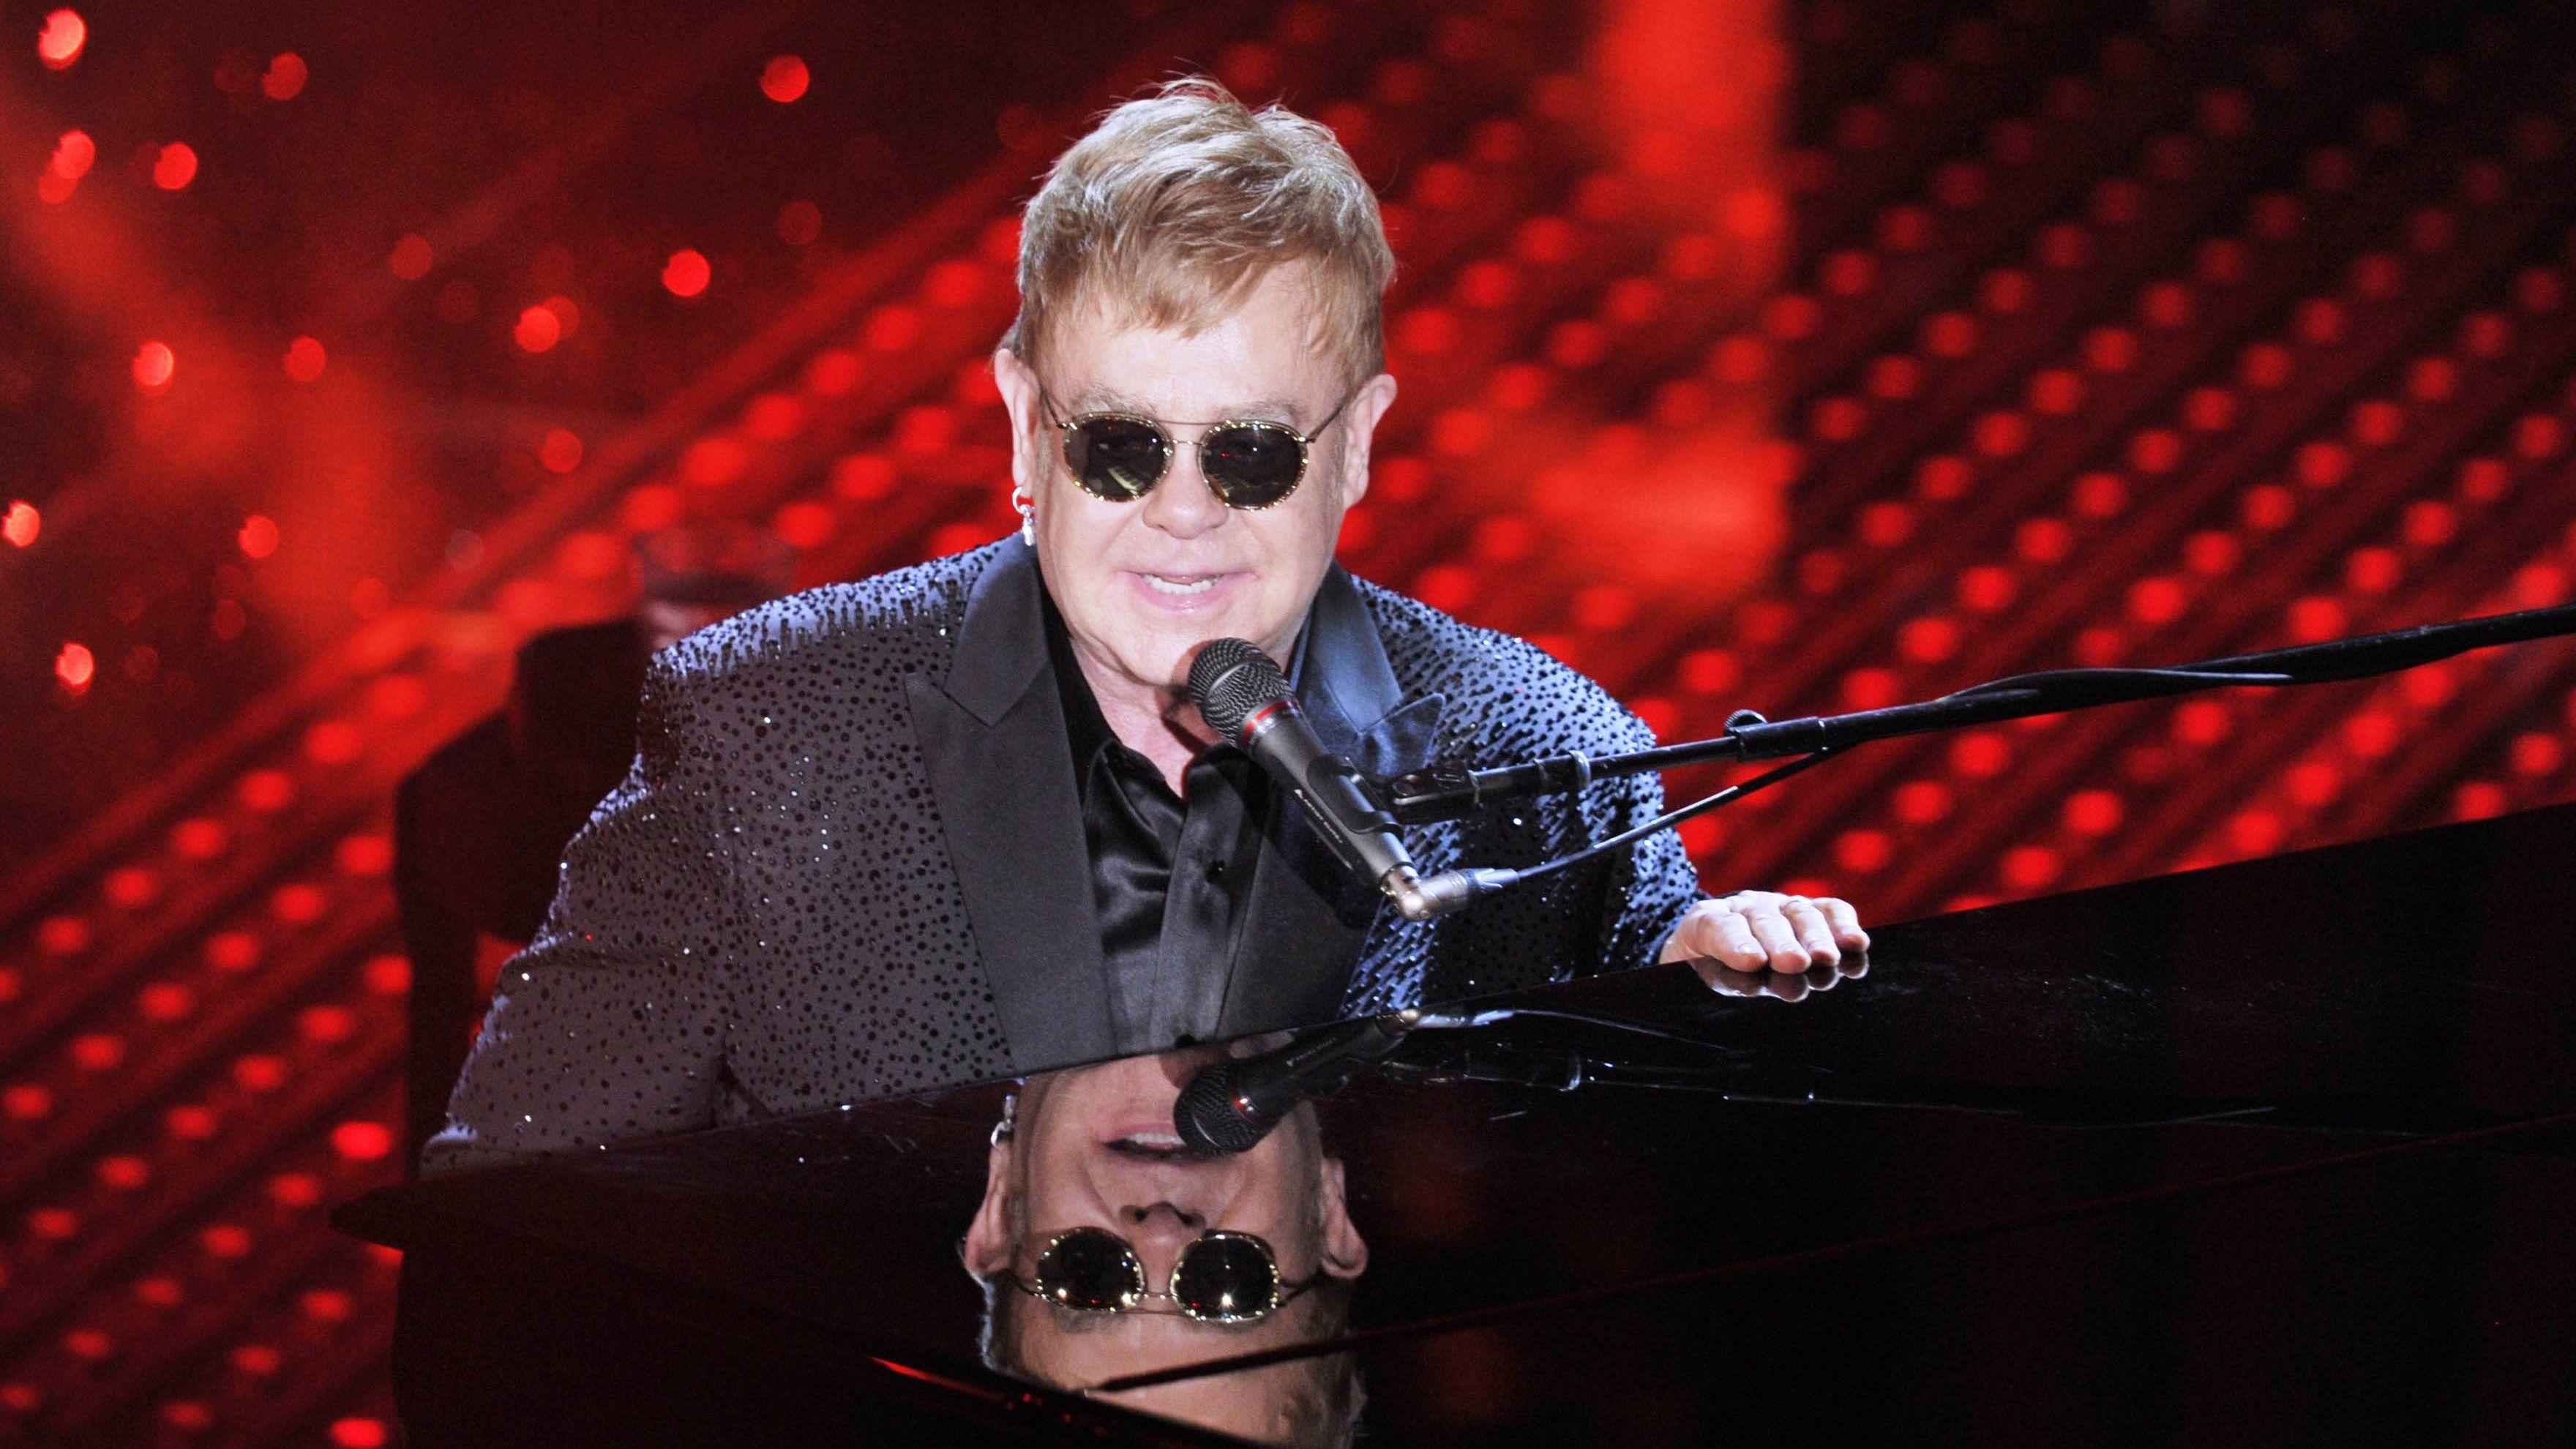 Elton John Wallpaper Image Photo Picture Background